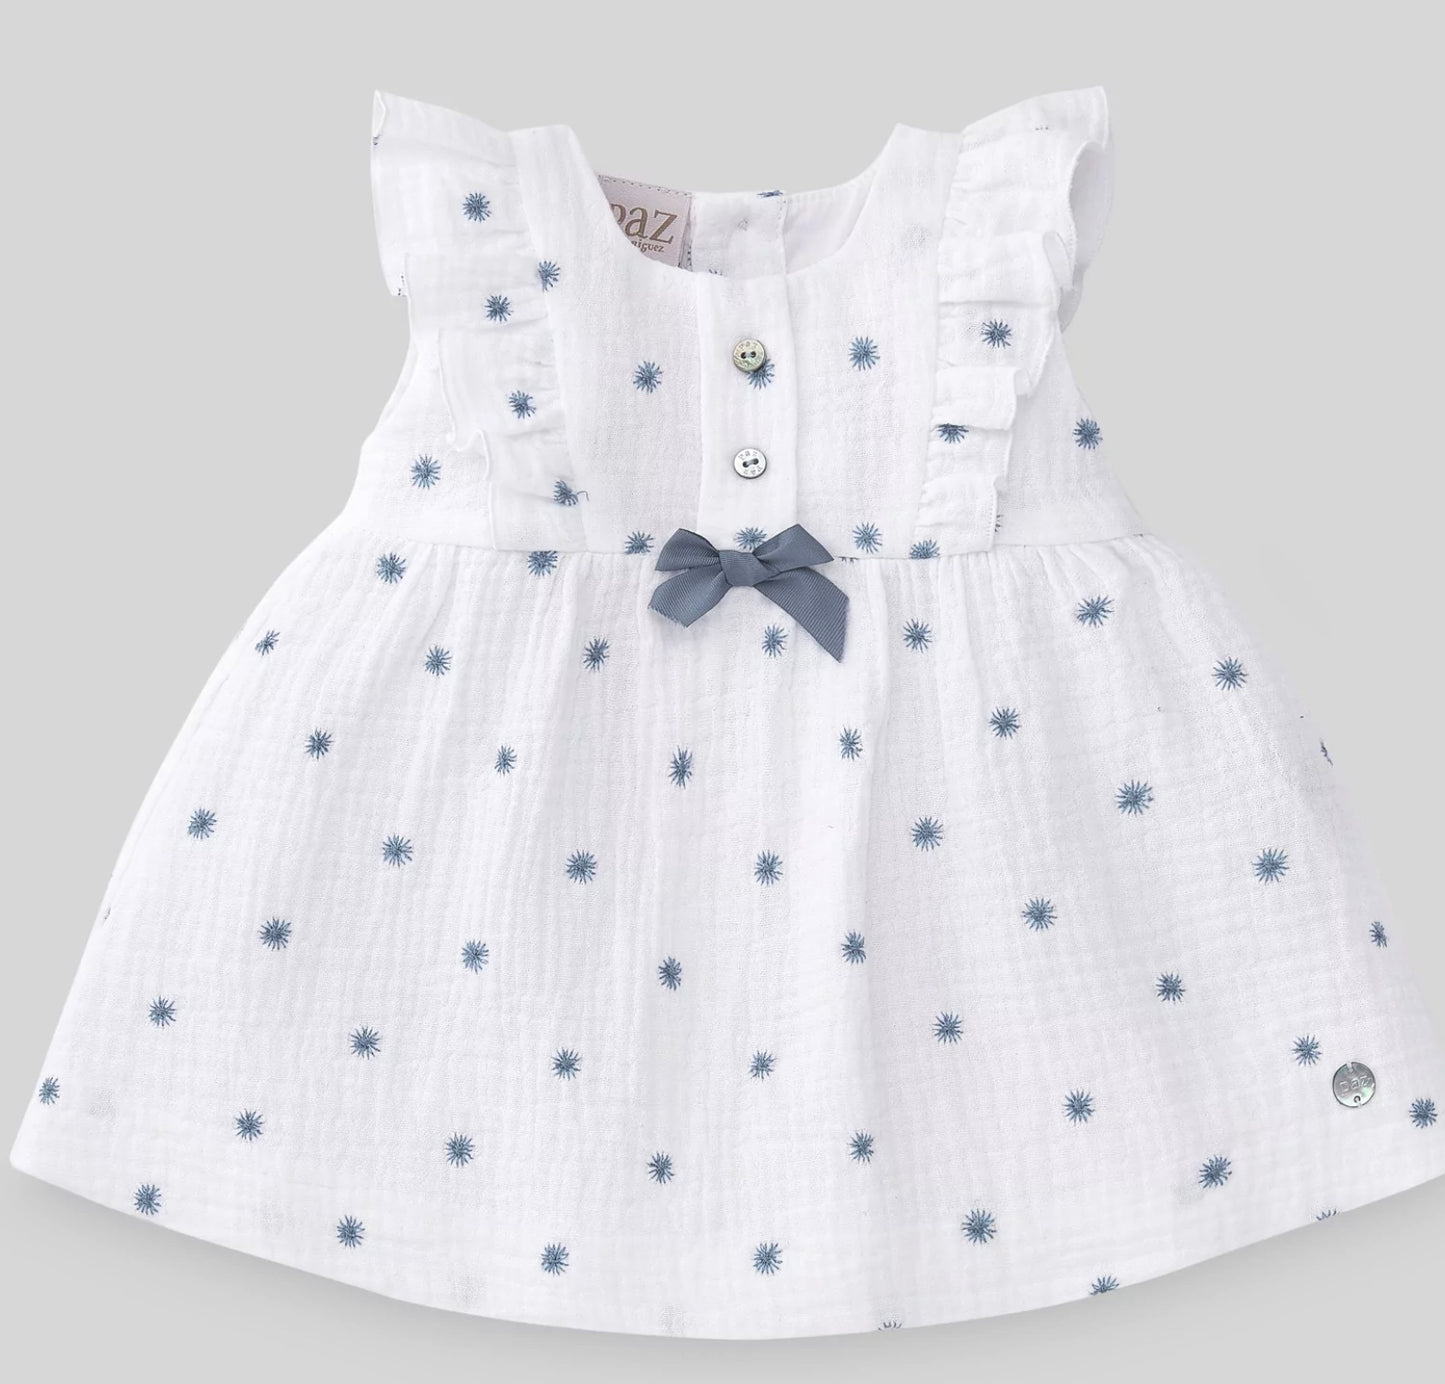 Paz Rodriguez Woven Newborn White/Blue Dress